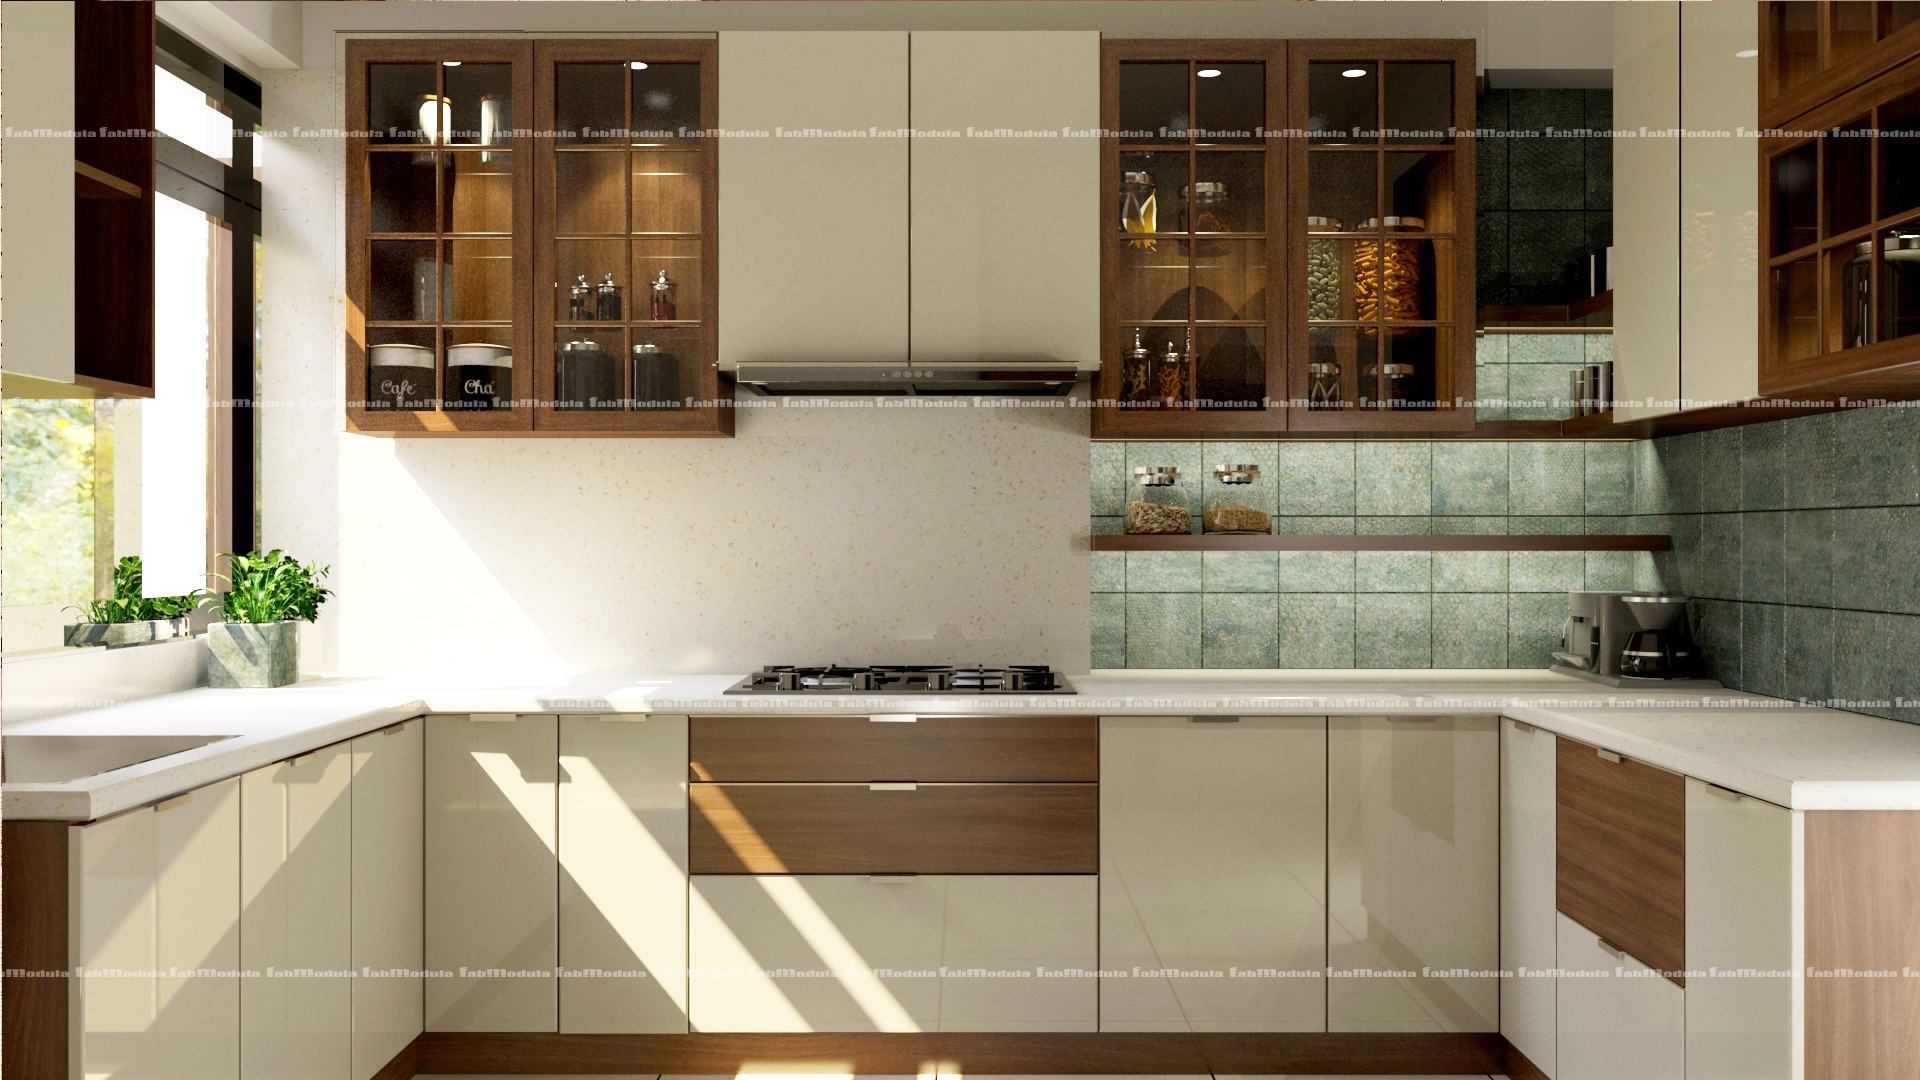 FabModula interior designer products U shaped modular kitchen natural lights